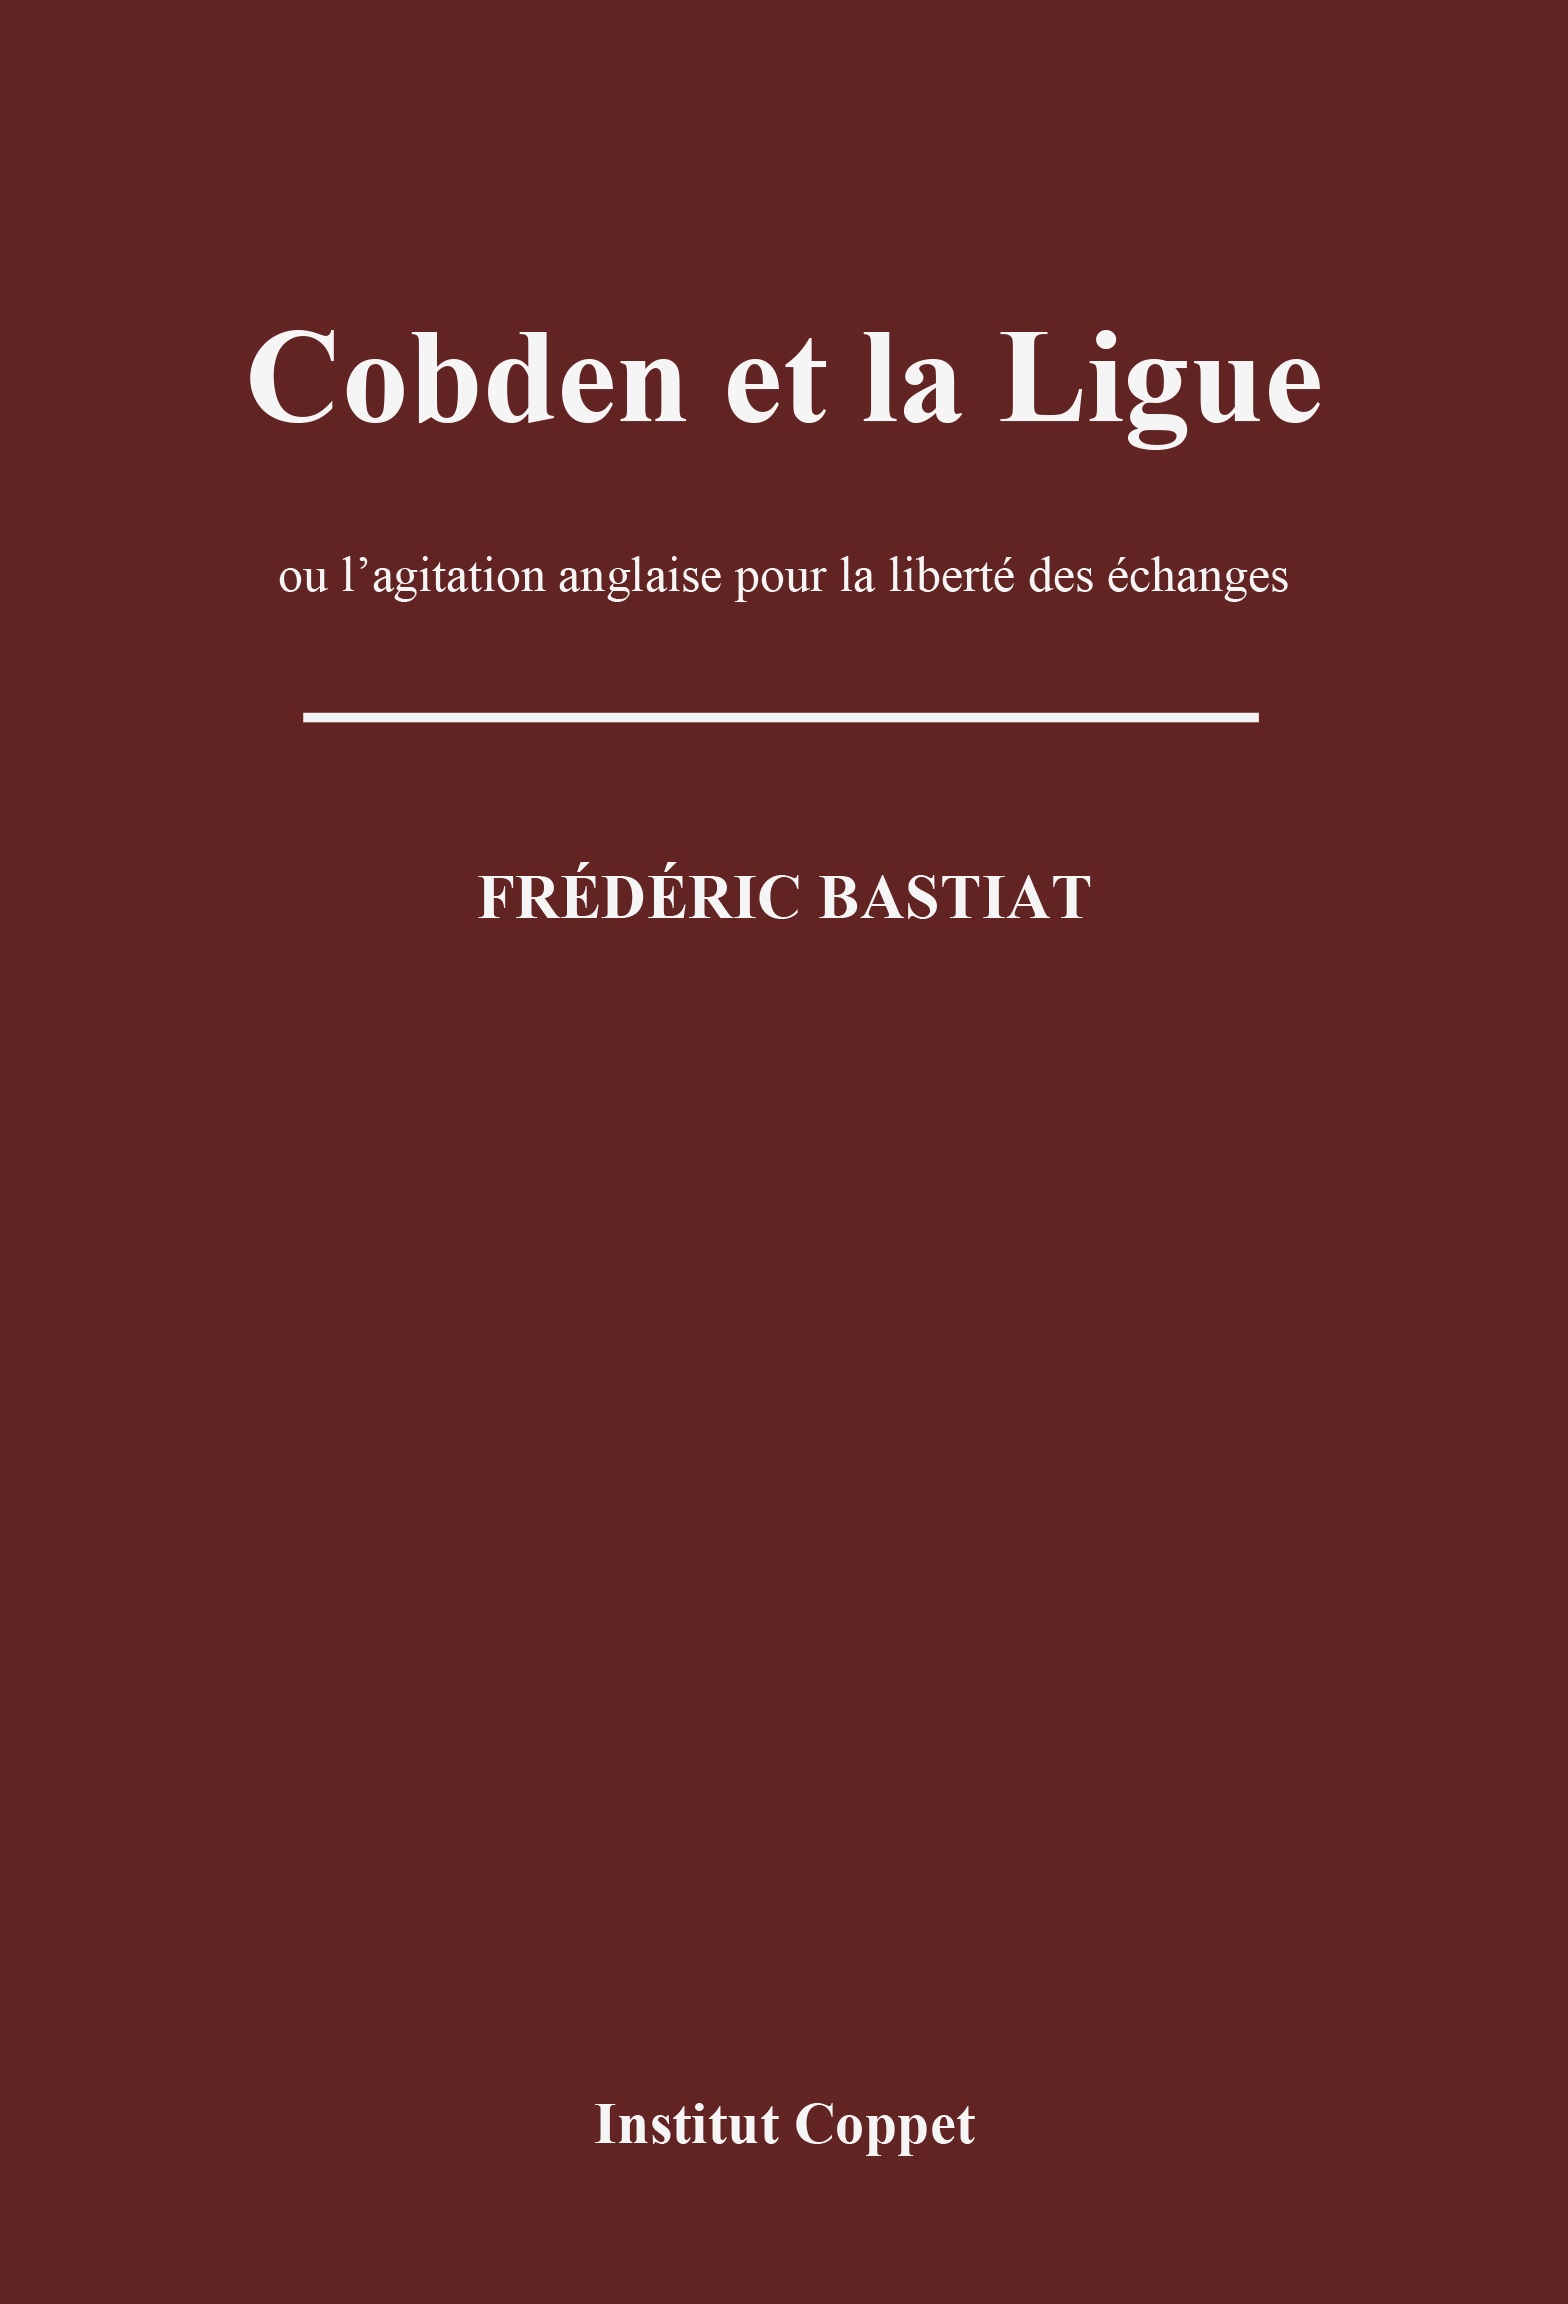 cover Bastiat Cobden